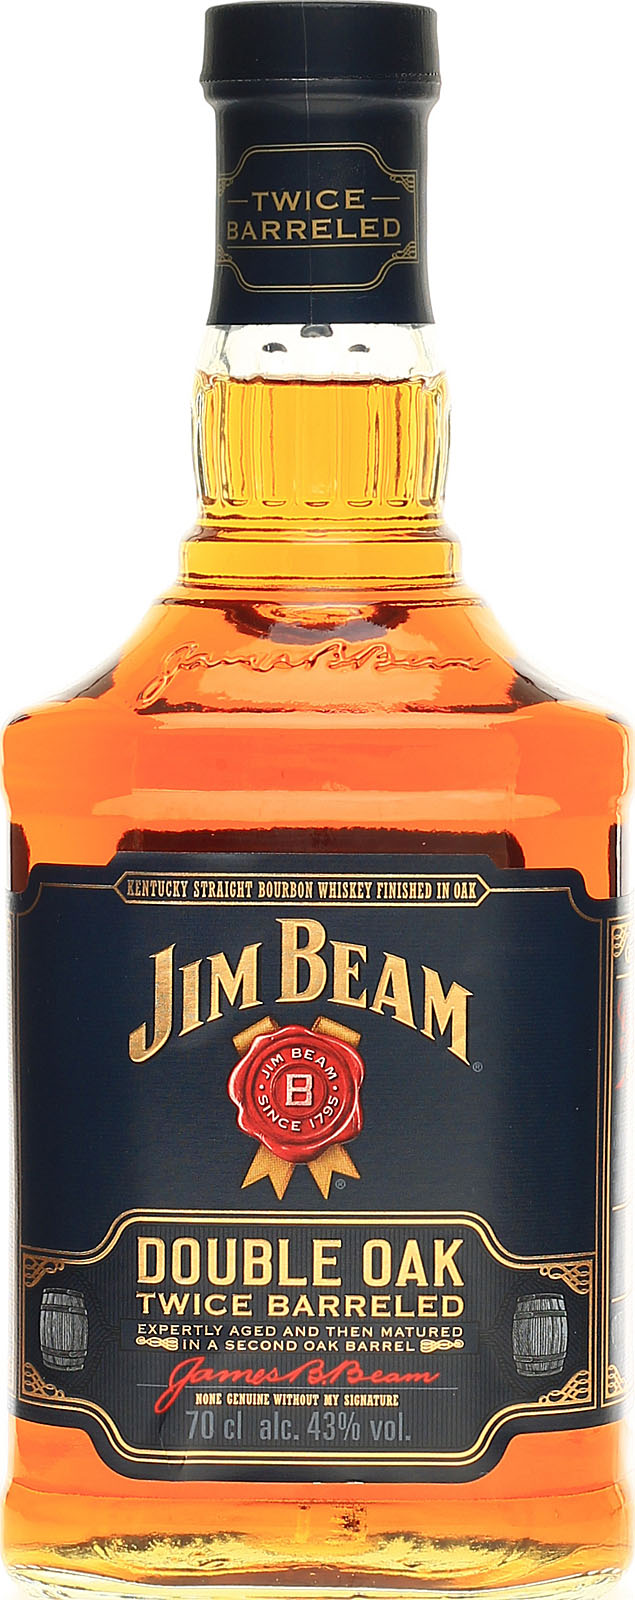 Barreled Sh Whisky Beam bei Oak Jim im Double Twice uns